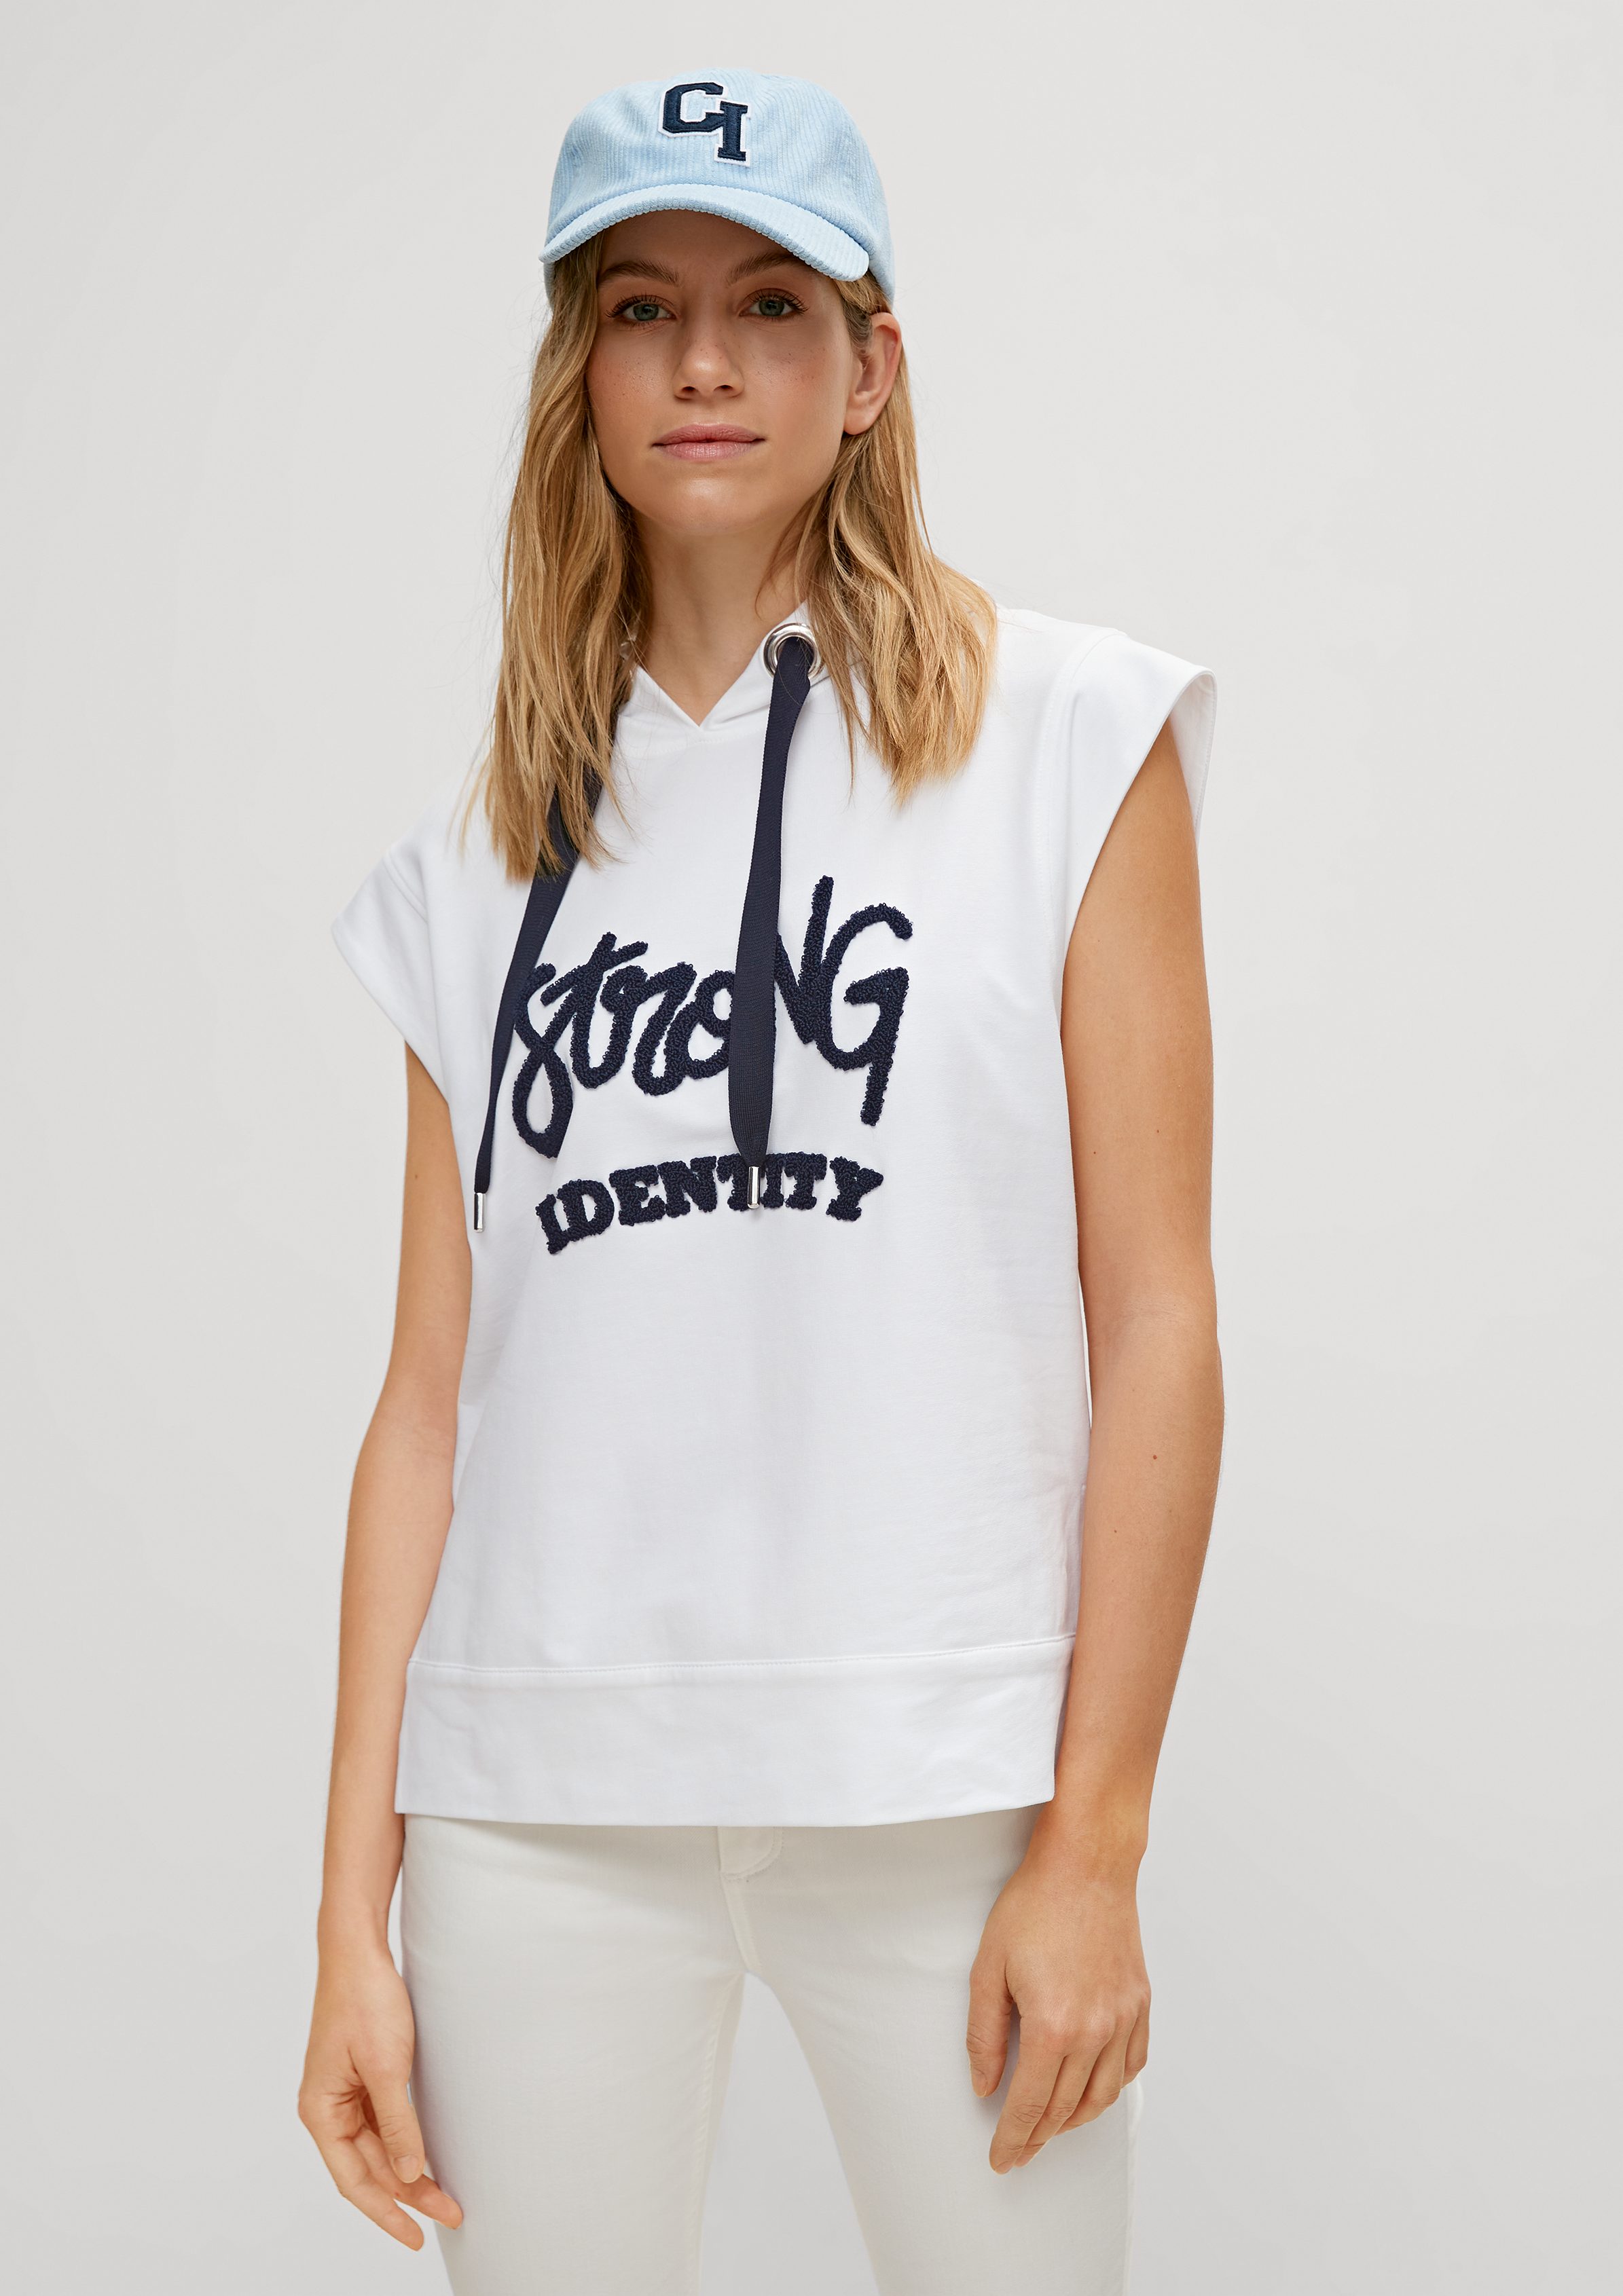 Kurzarmshirt mit Sweatshirt casual comma Wording identity Stickerei